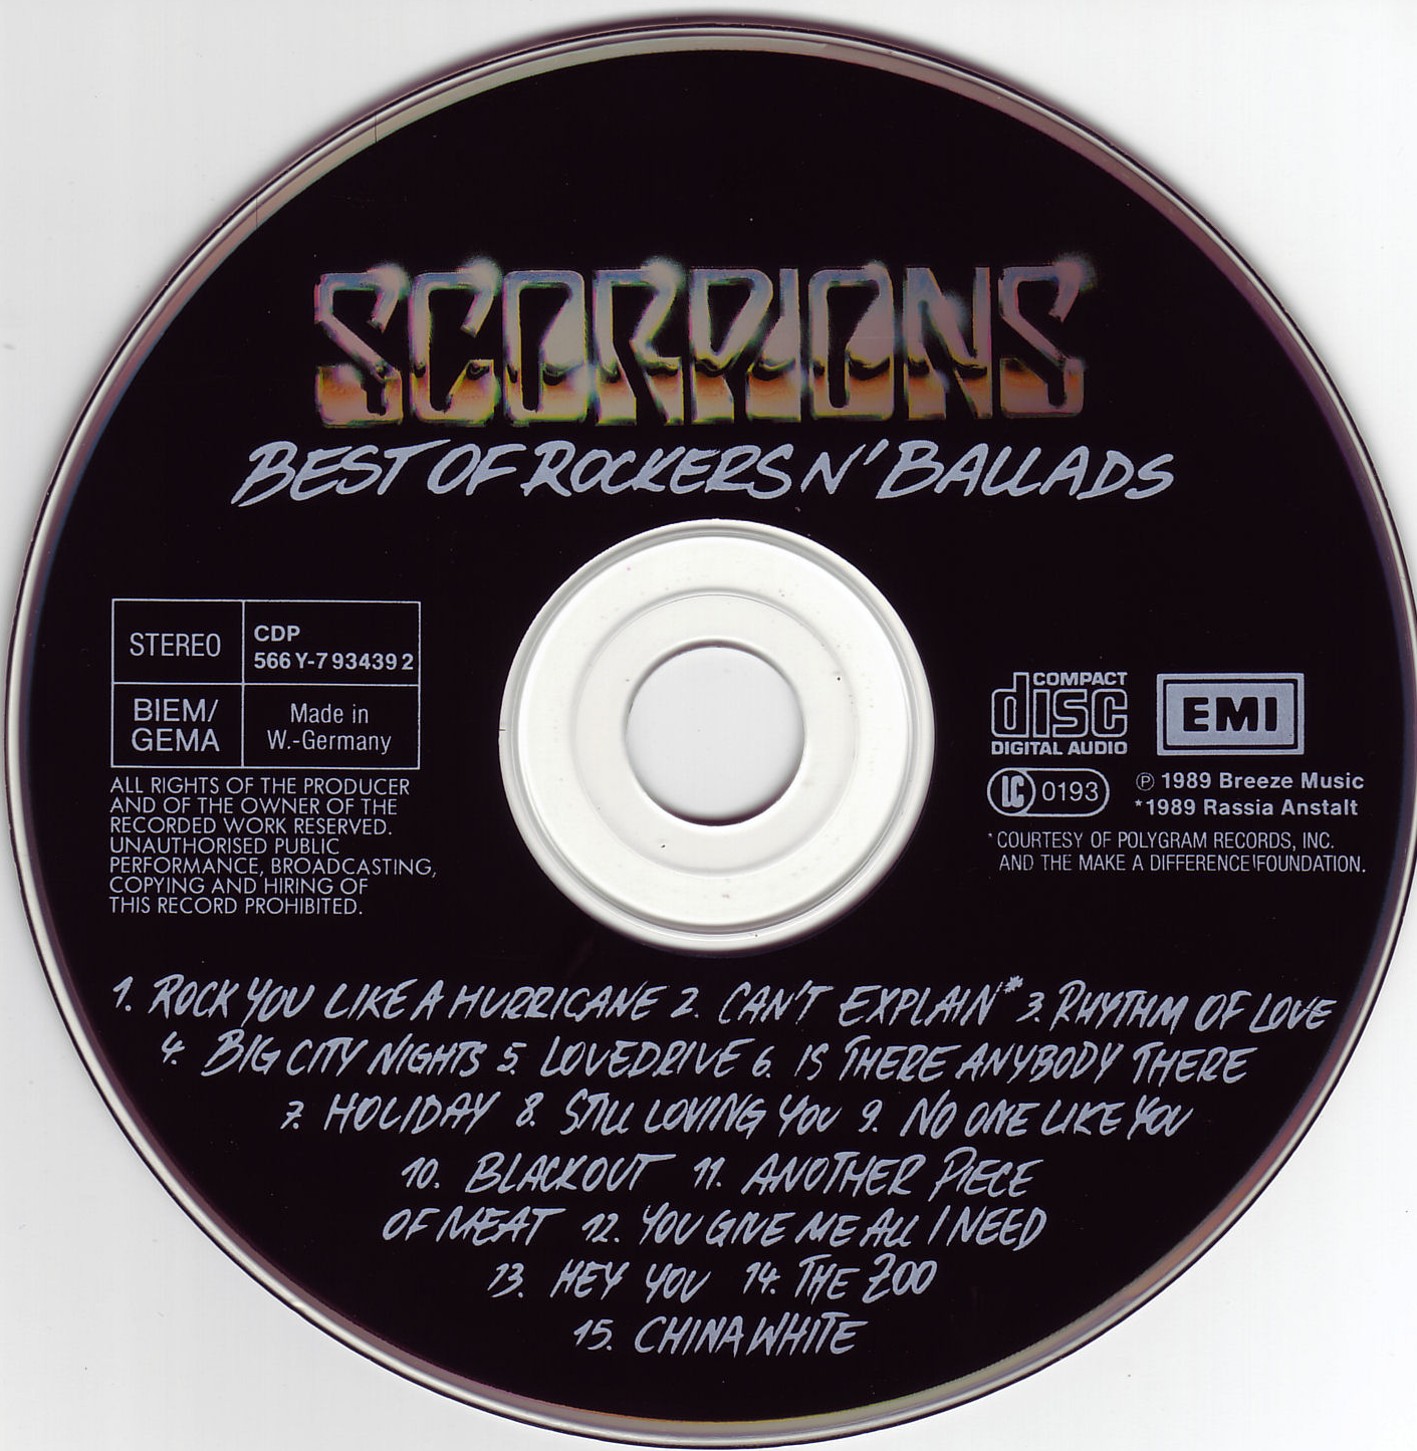 Scorpions flac. Scorpions best Ballads диск. Scorpions CD. Обложка диска Scorpions. Scorpions - gentle Power.